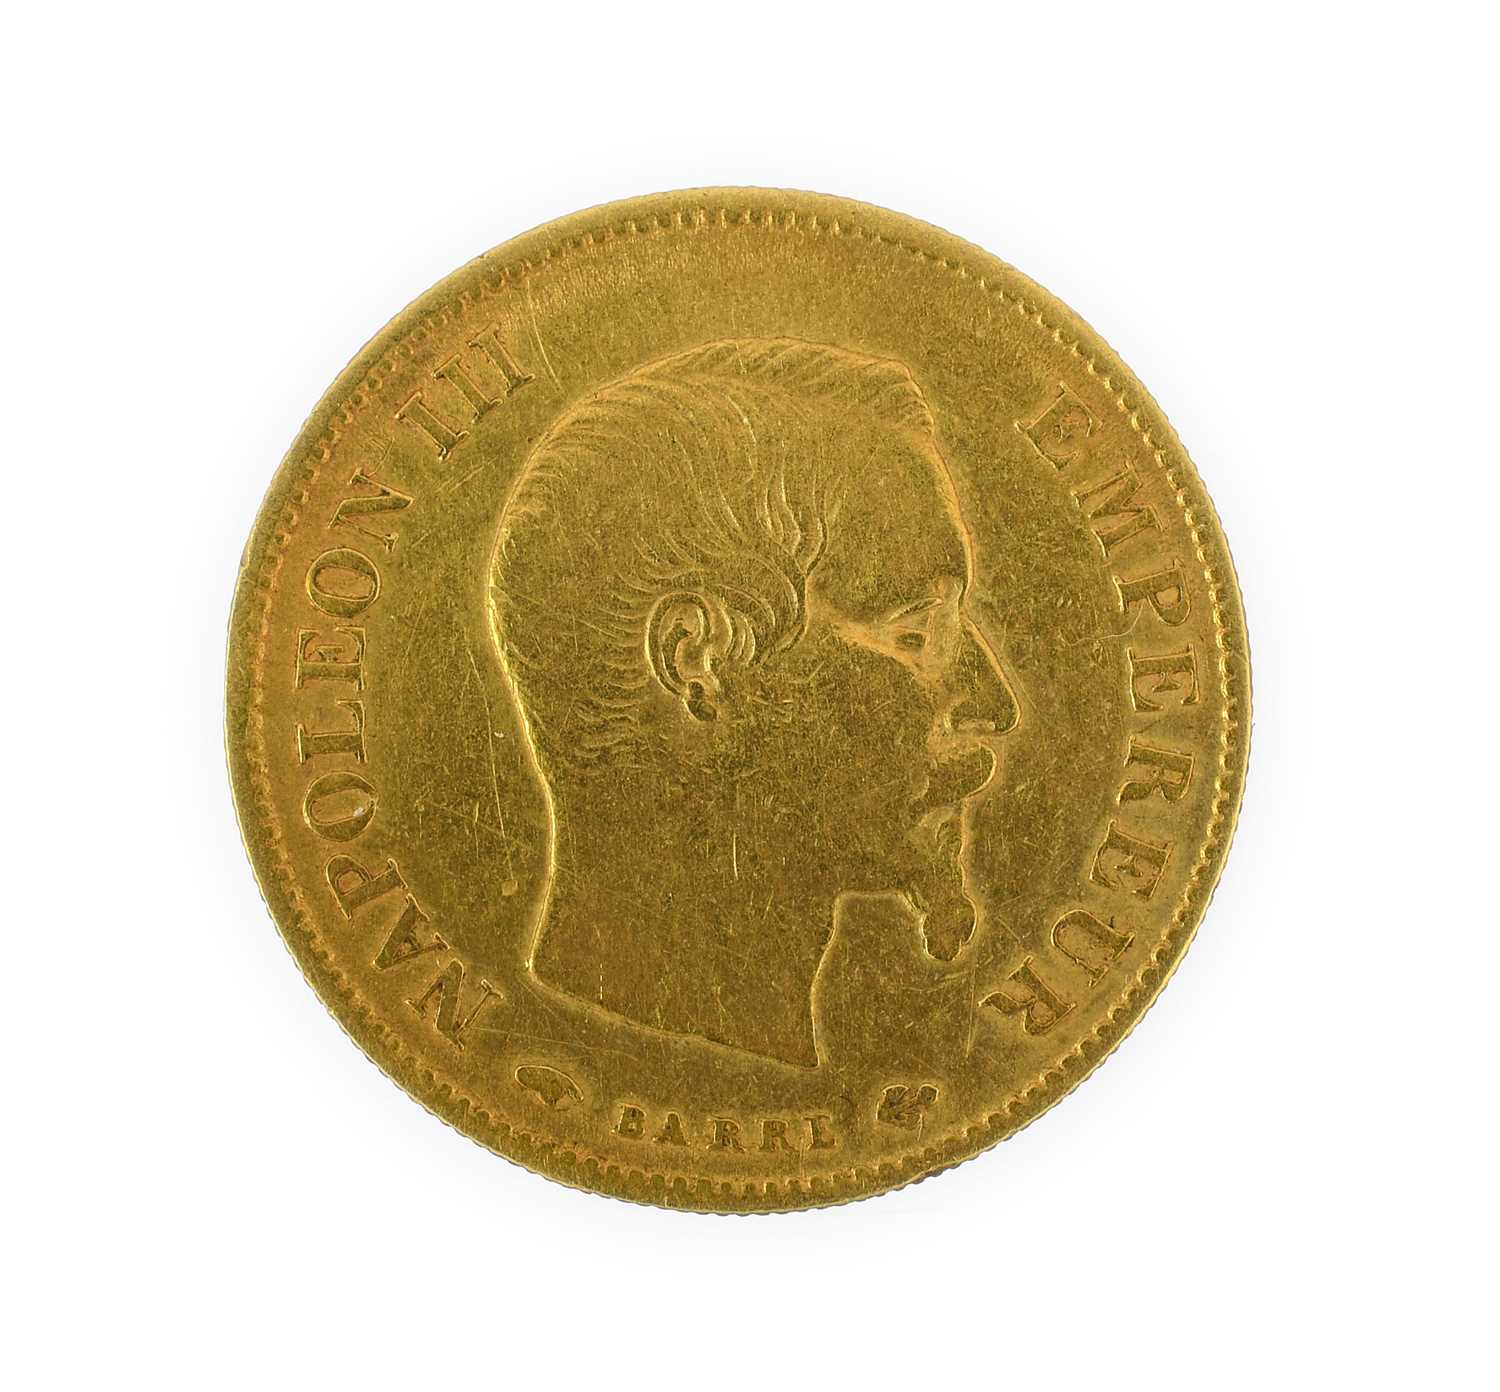 France, Gold 10 Francs 1858A, obv. 'NAPOLEON III EMPEREUR' around bust, rev. 'EMPIRE FRANÇAIS' &